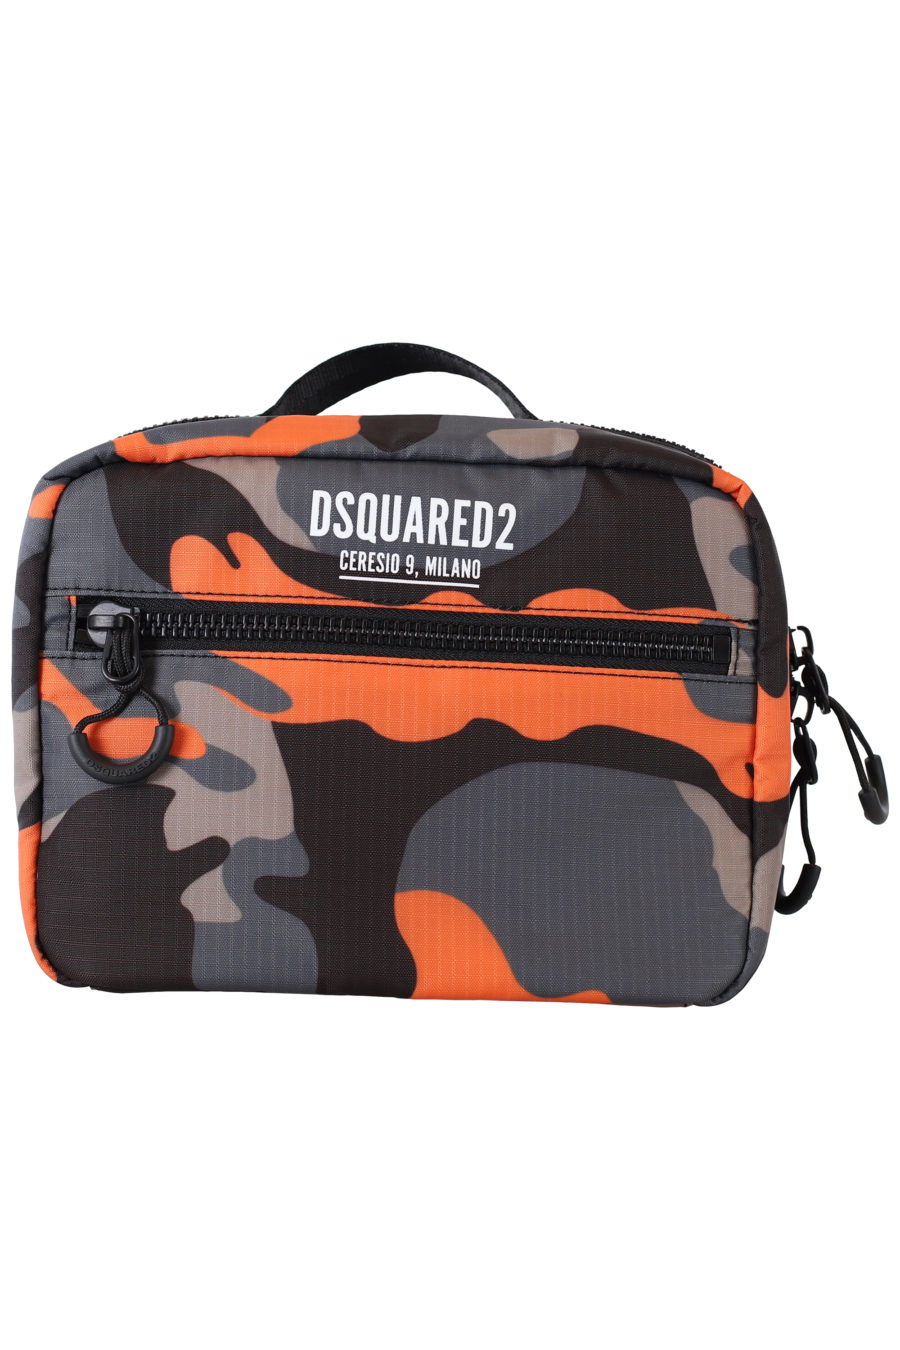 Orange camouflage toiletry bag with ceresio logo - IMG 2285